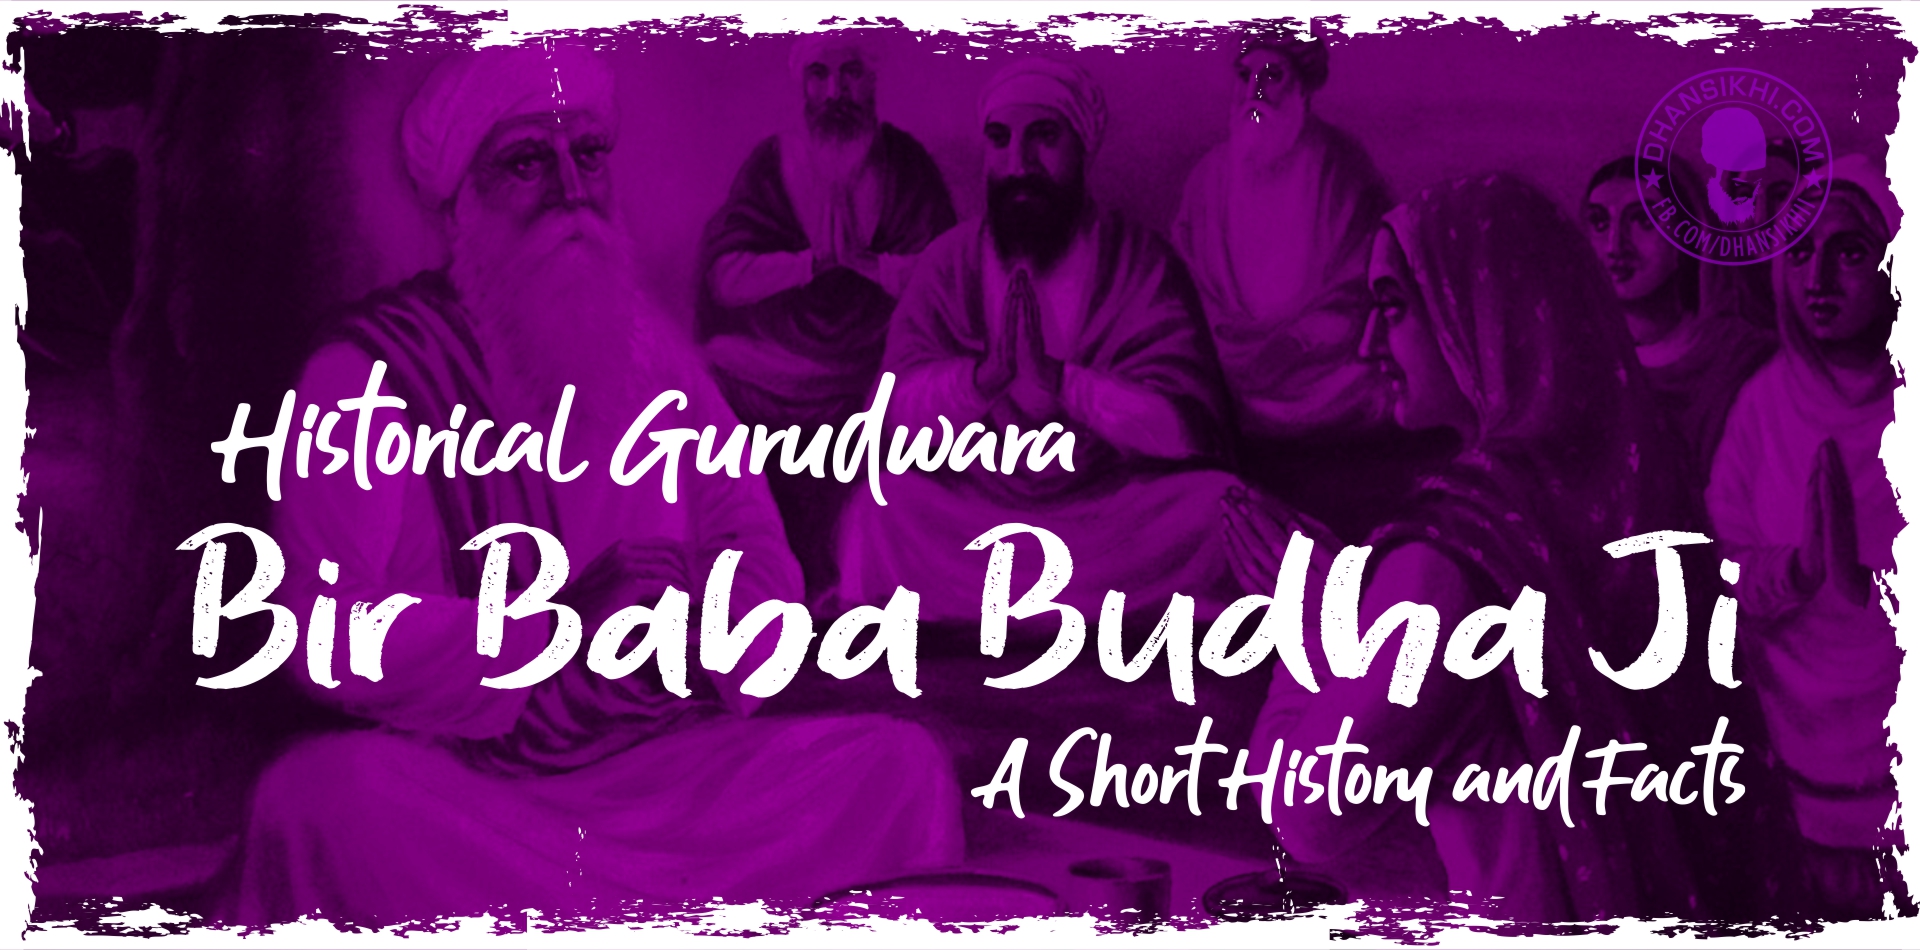 Gurudwara Bir Baba Budha Sahib Ji – History